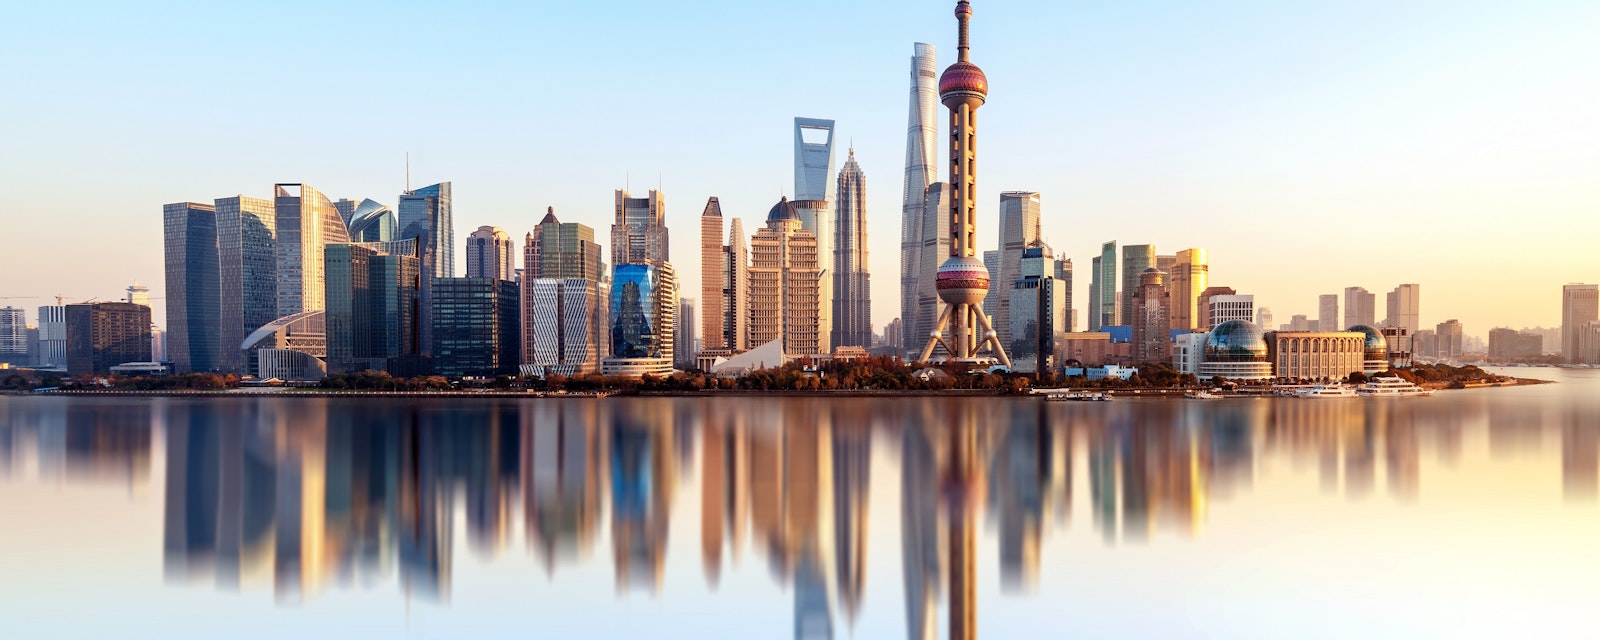 Shanghai,Skyline,With,Modern,Urban,Skyscrapers,,China